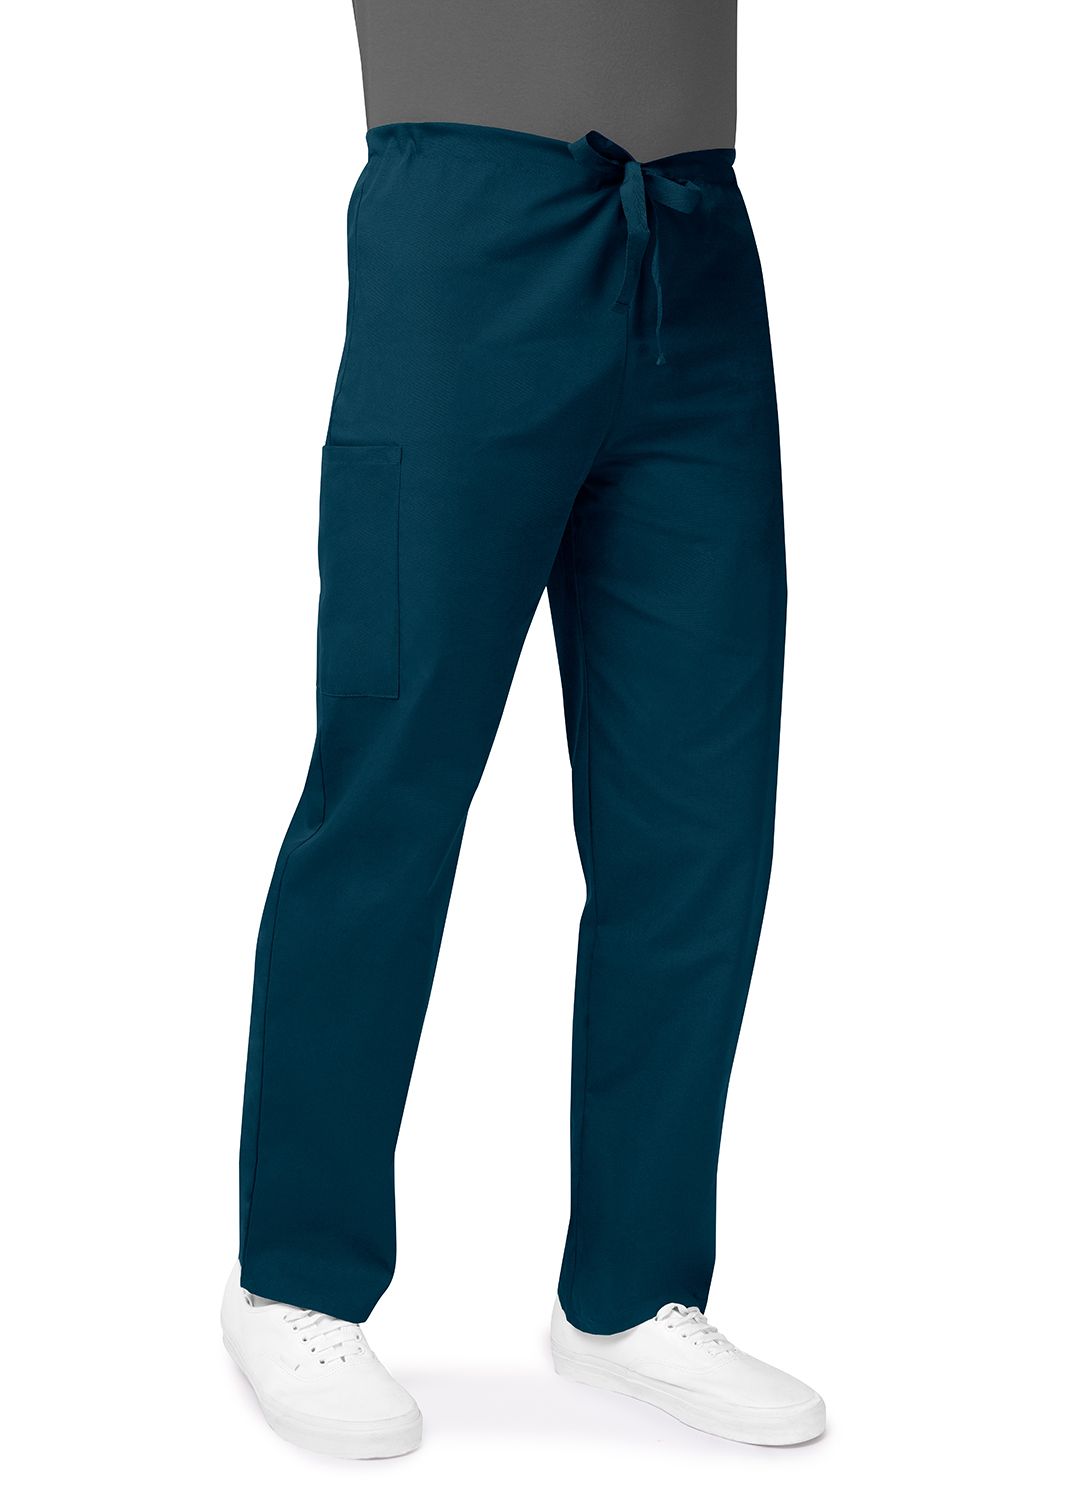 Unisex Drawstring Pants by Adar XS-5X / Caribbean Blue